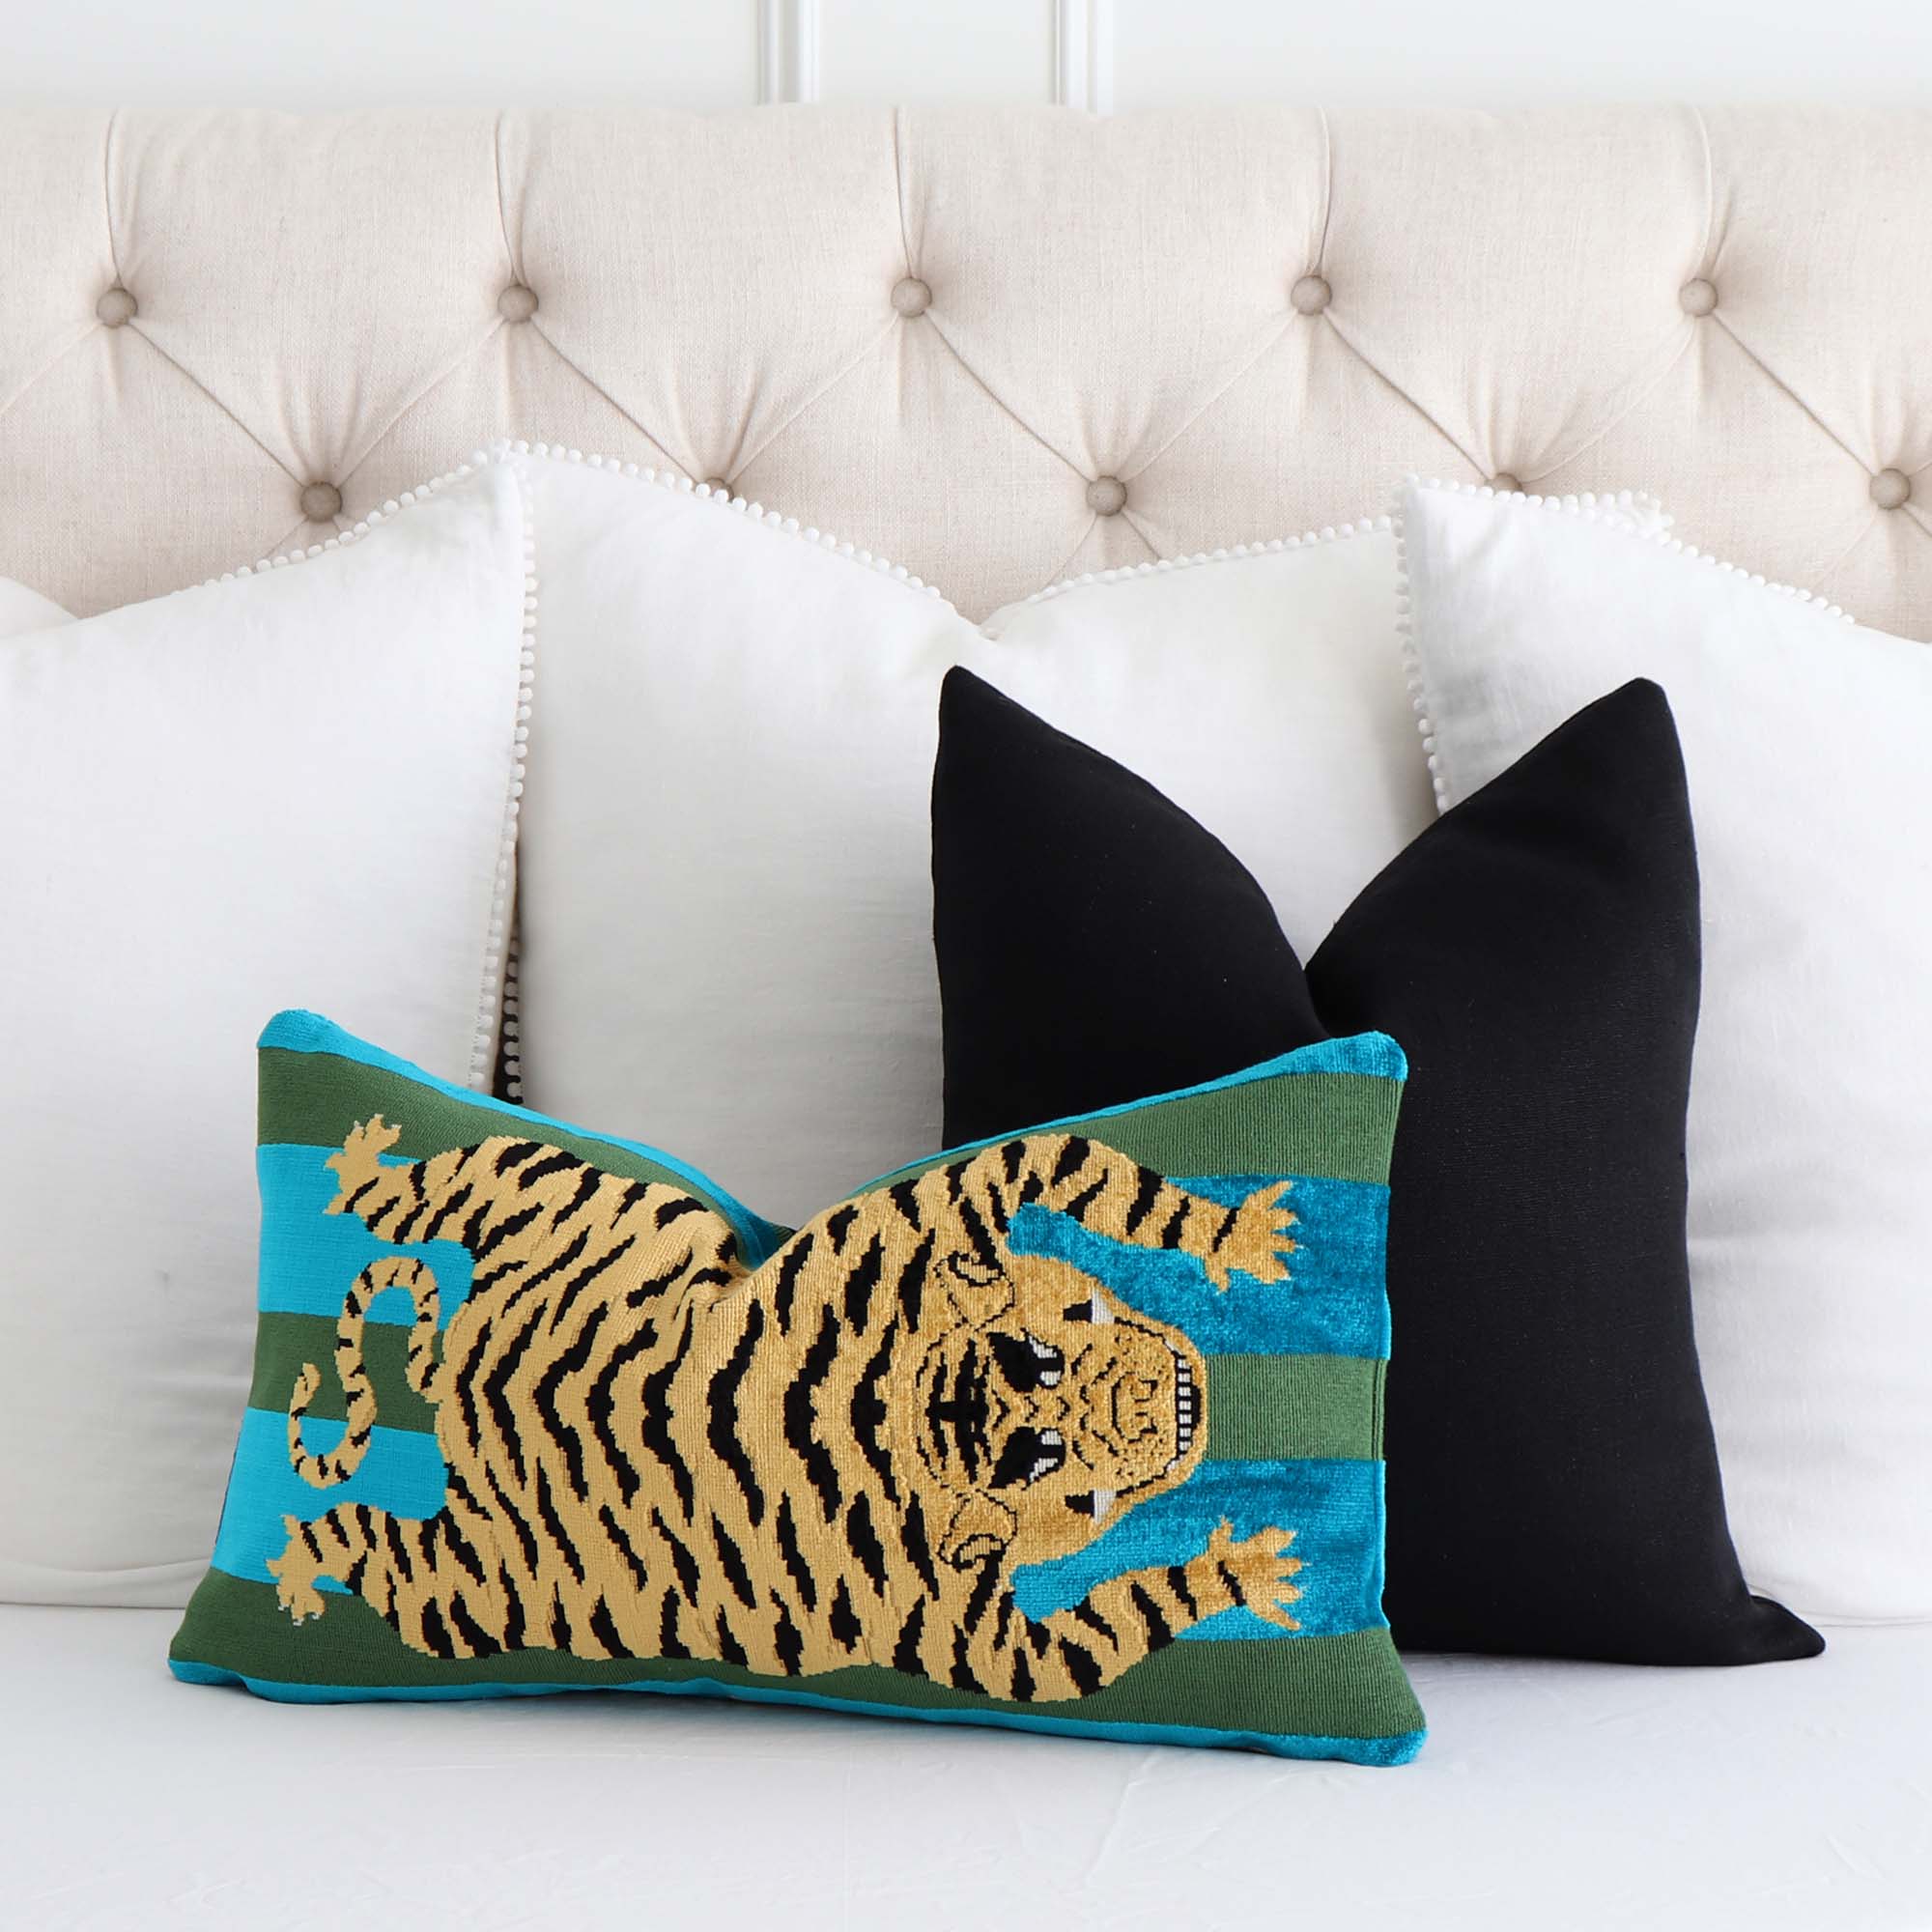 Schumacher Jokhang Hartig Tiger Velvet Peacock/Olive Designer Throw Pillow Cover with Solid Black Linen Throw Pillow